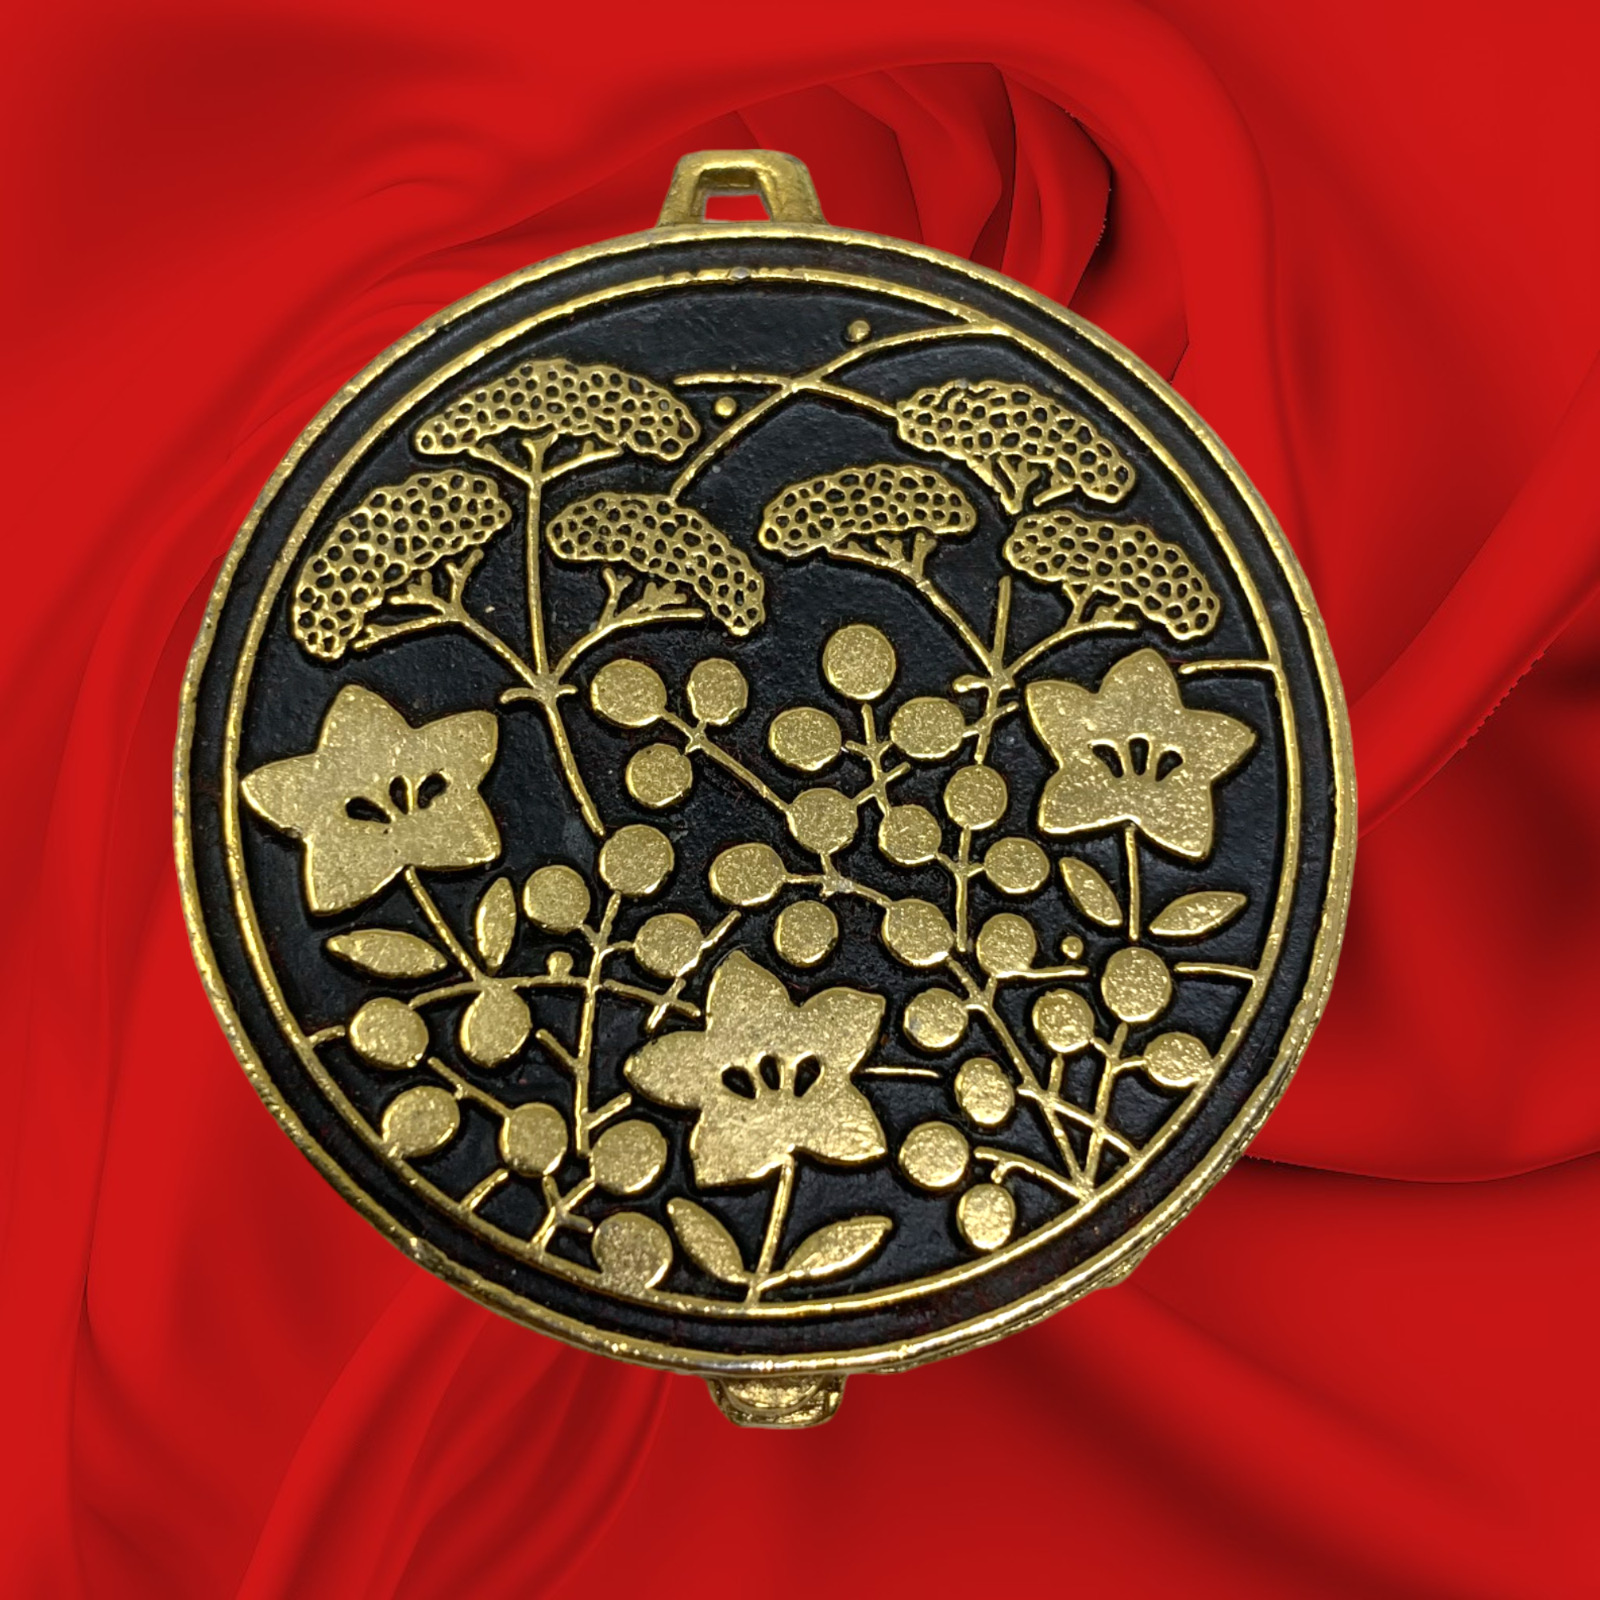 Vintage Shiseido Zen Solid Perfume Locket Pendant Compact Gold Tone Collectible